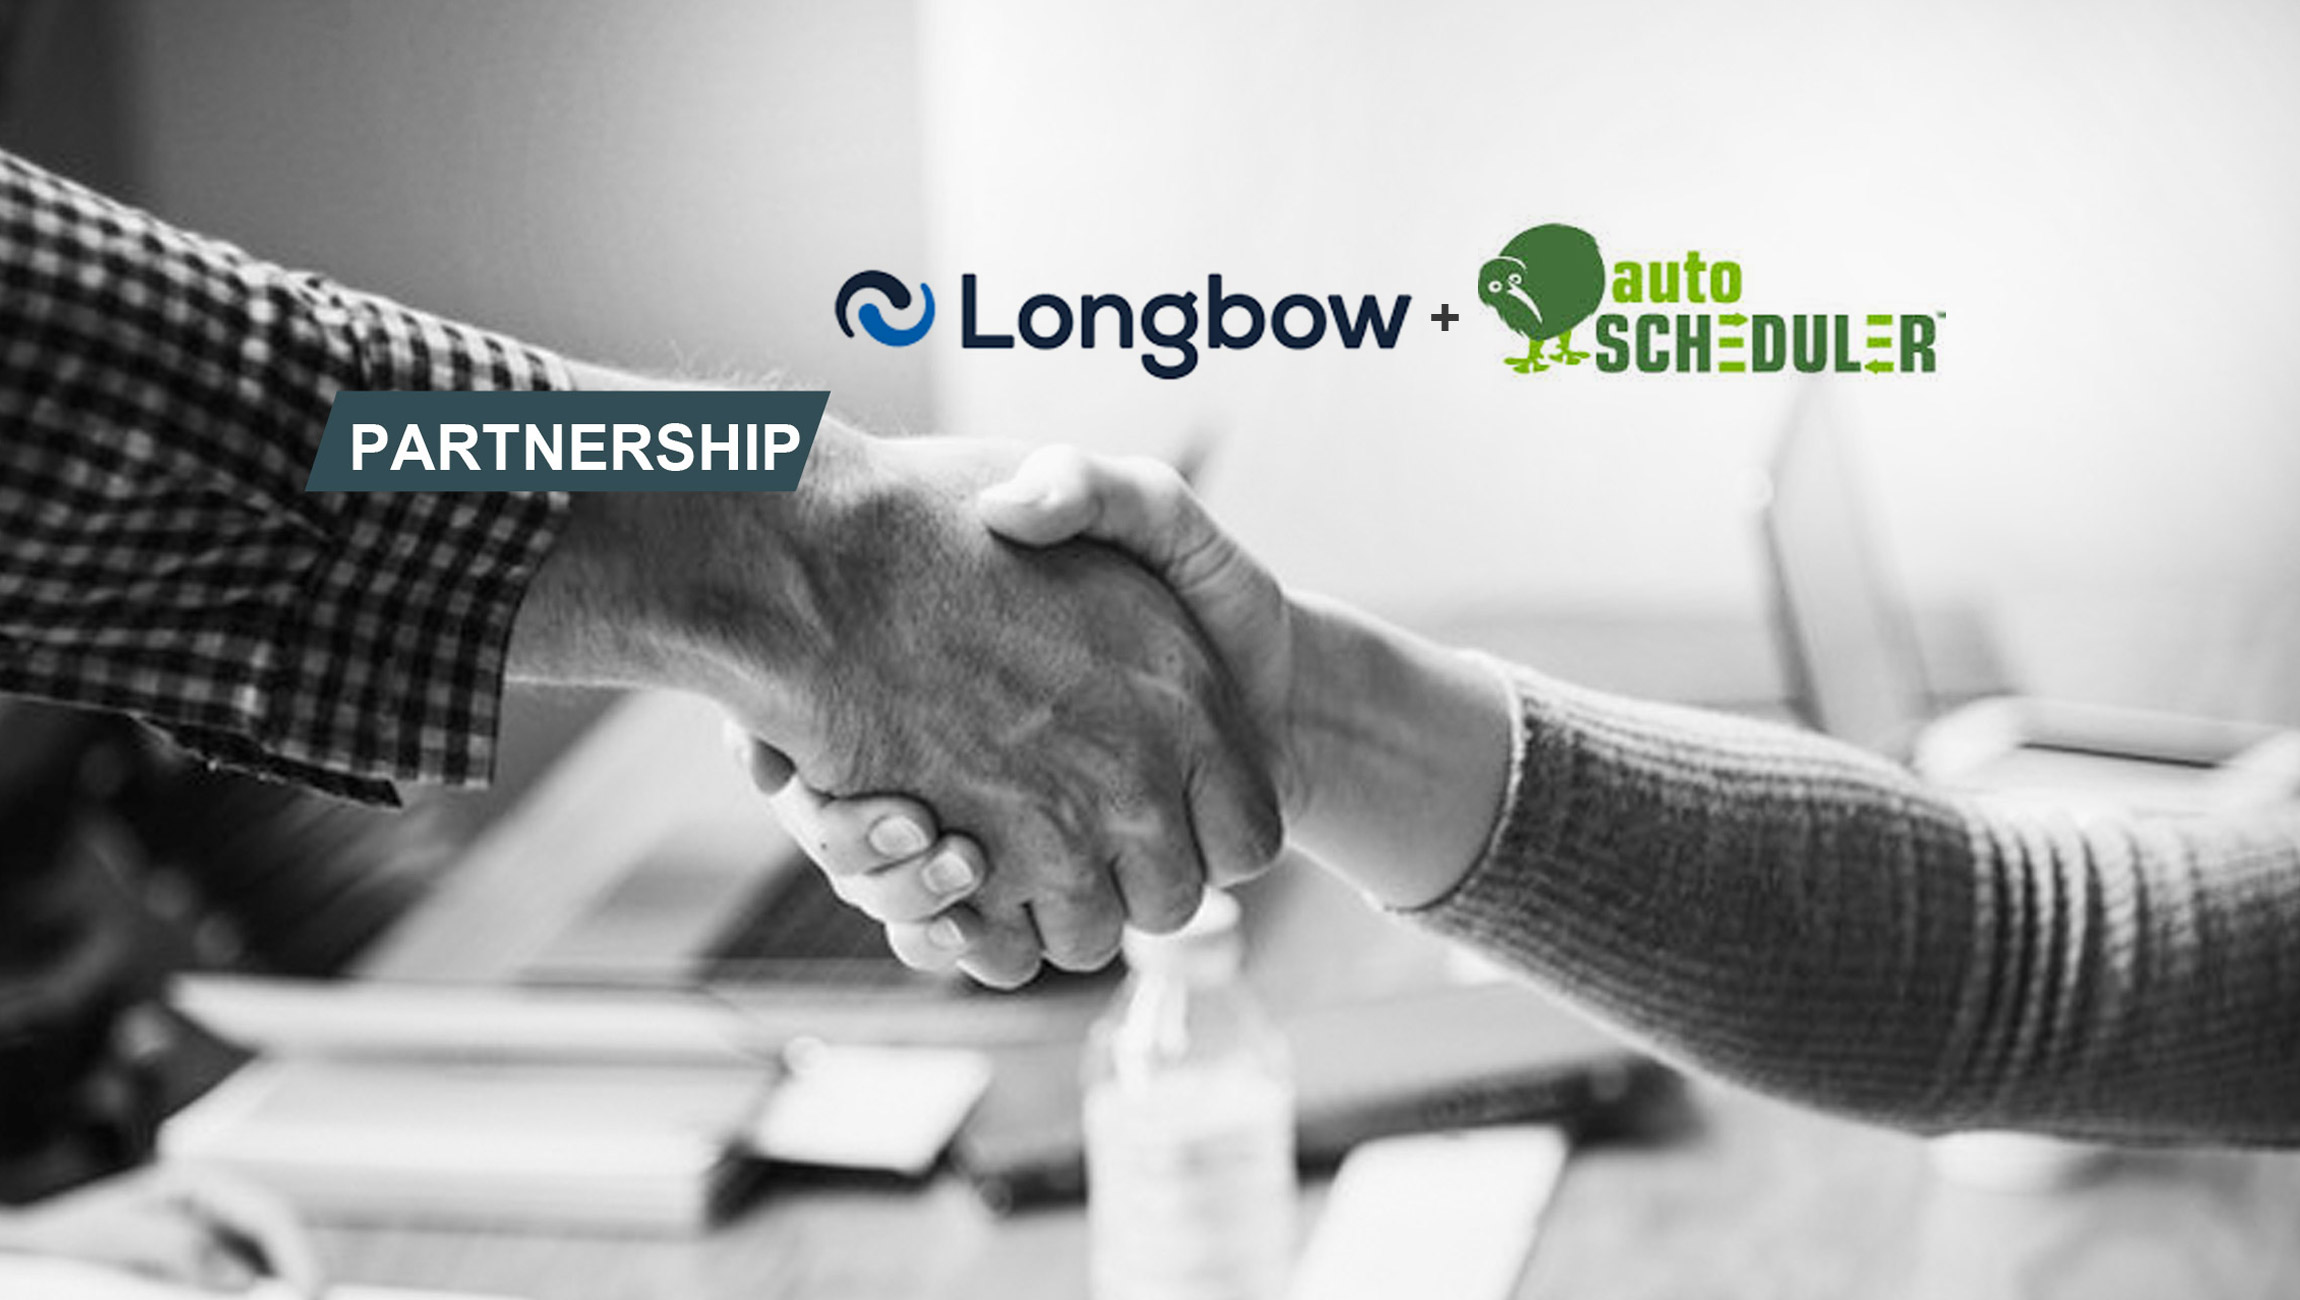 Longbow Advantage And AutoScheduler Announce Strategic Partnership